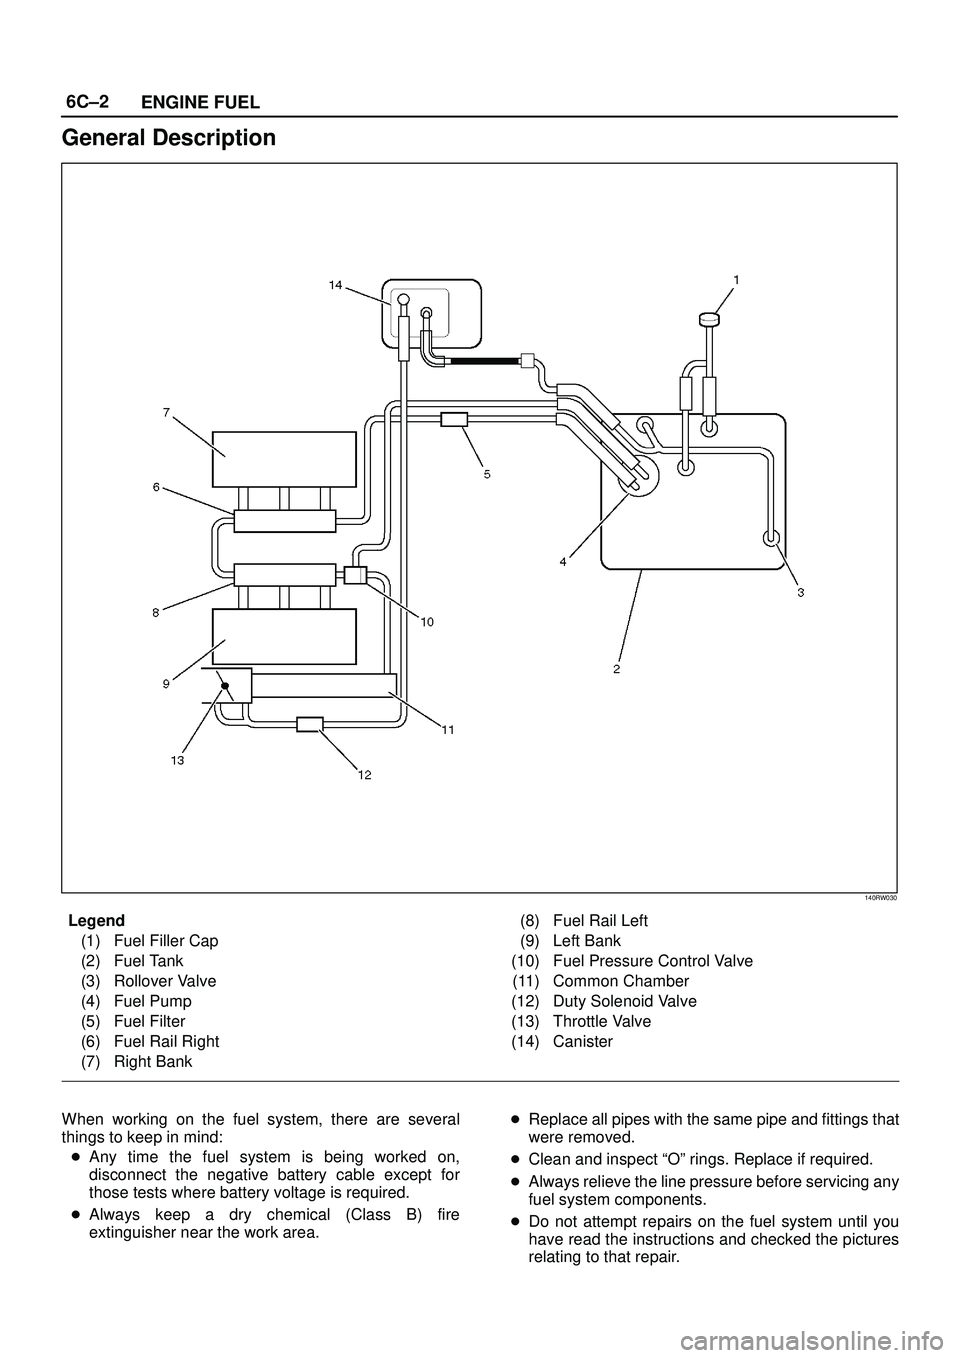 ISUZU TROOPER 1998  Service User Guide 6C±2
ENGINE FUEL
General Description
140RW030
Legend
(1) Fuel Filler Cap
(2) Fuel Tank
(3) Rollover Valve
(4) Fuel Pump
(5) Fuel Filter
(6) Fuel Rail Right
(7) Right Bank(8) Fuel Rail Left
(9) Left B